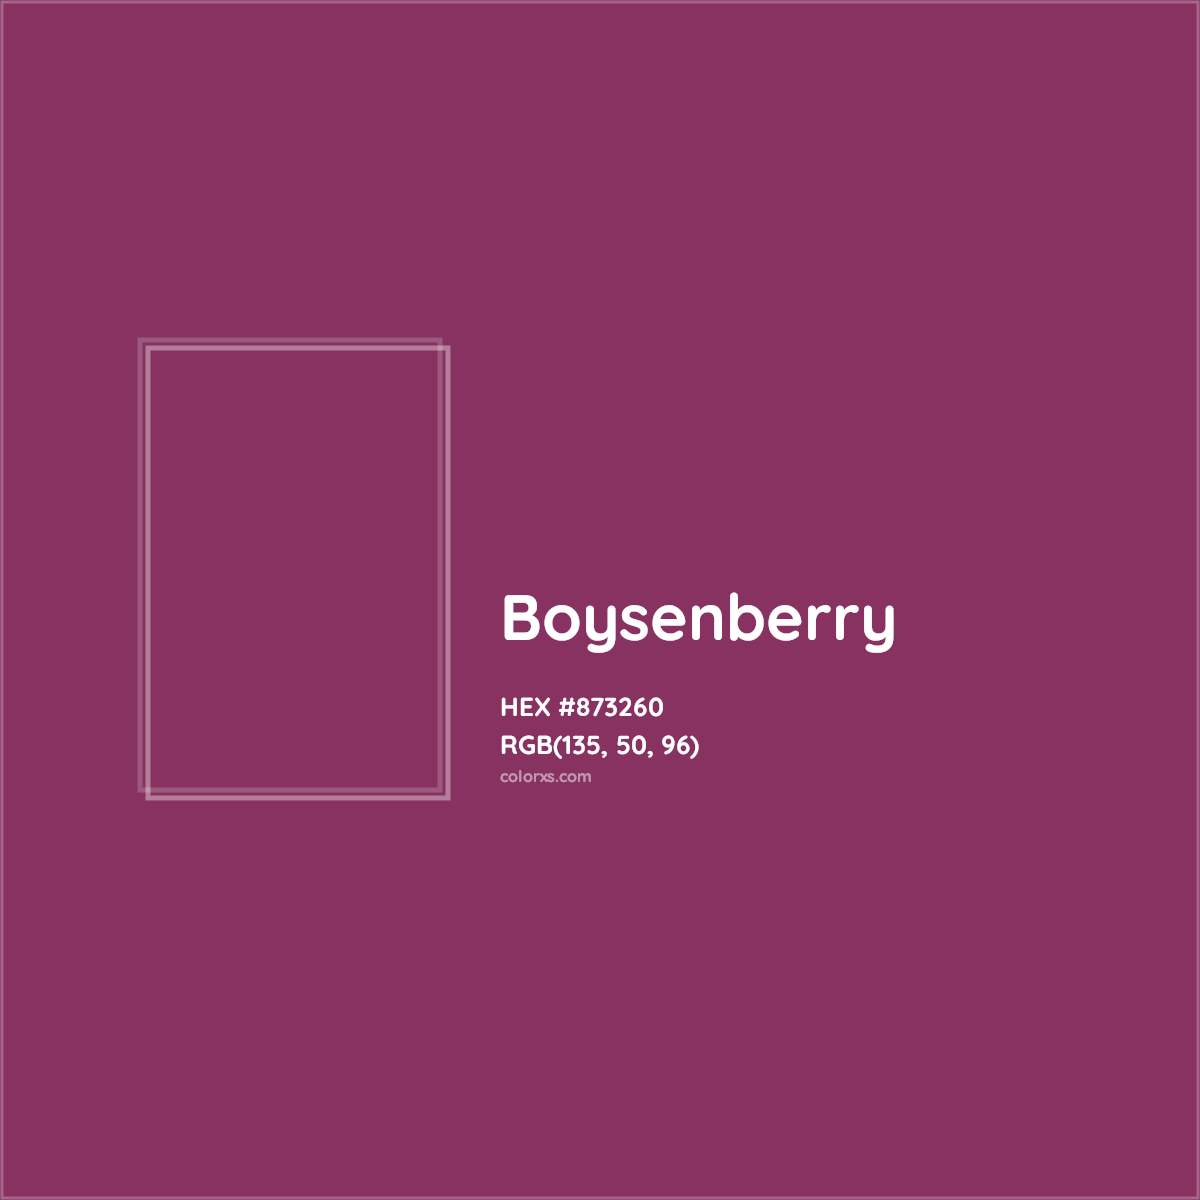 HEX #873260 Boysenberry Color - Color Code